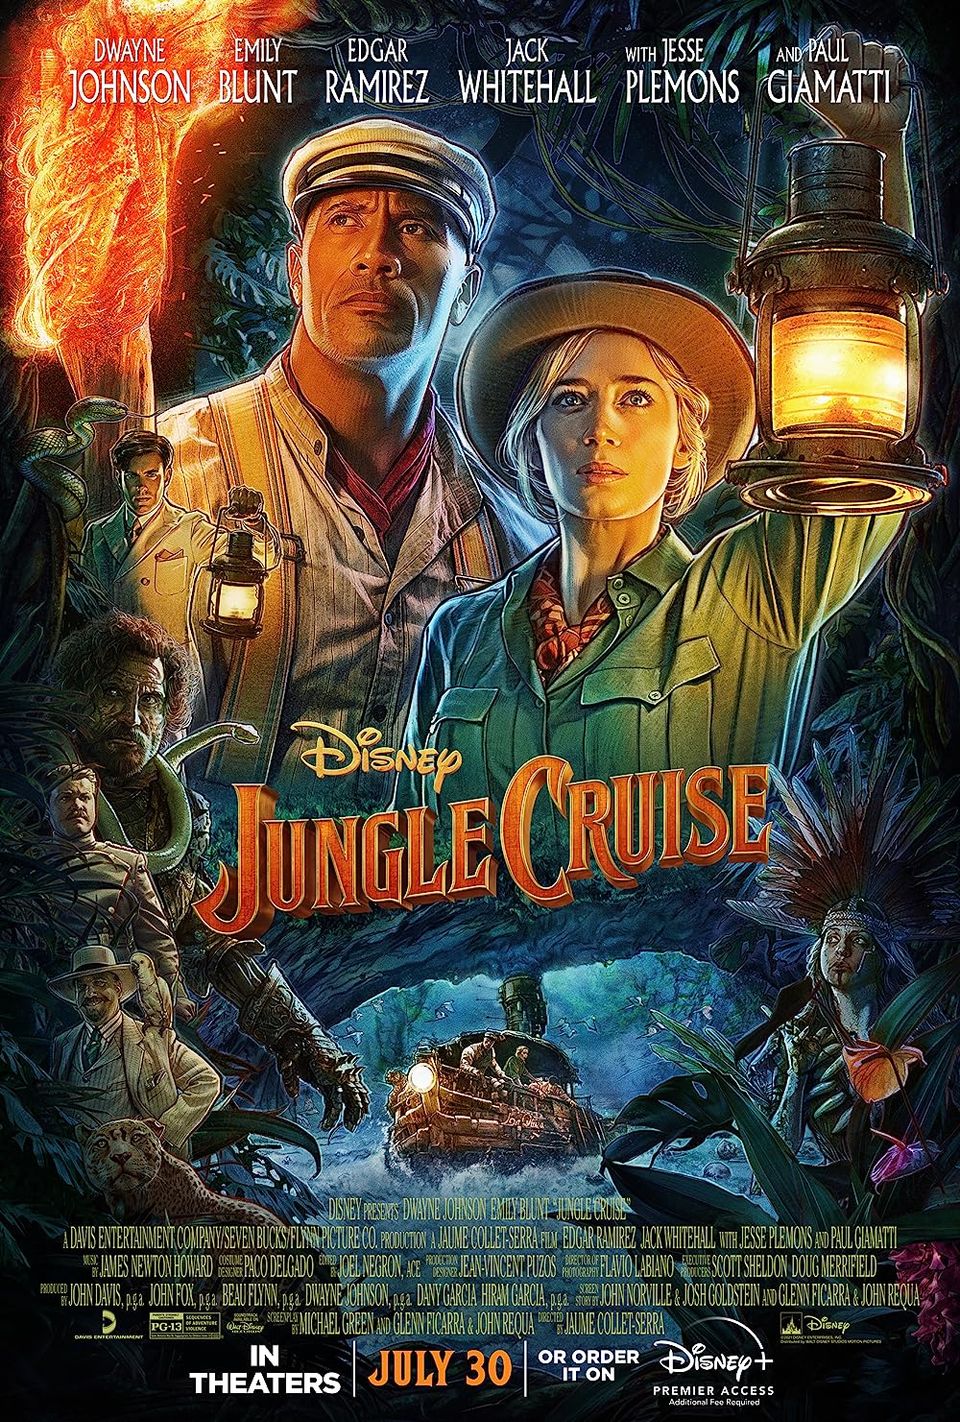 Jungle Cruise: การเดินทางผจญภัยในแม่น้ำกับ Dwayne Johnson และ Emily Blunt